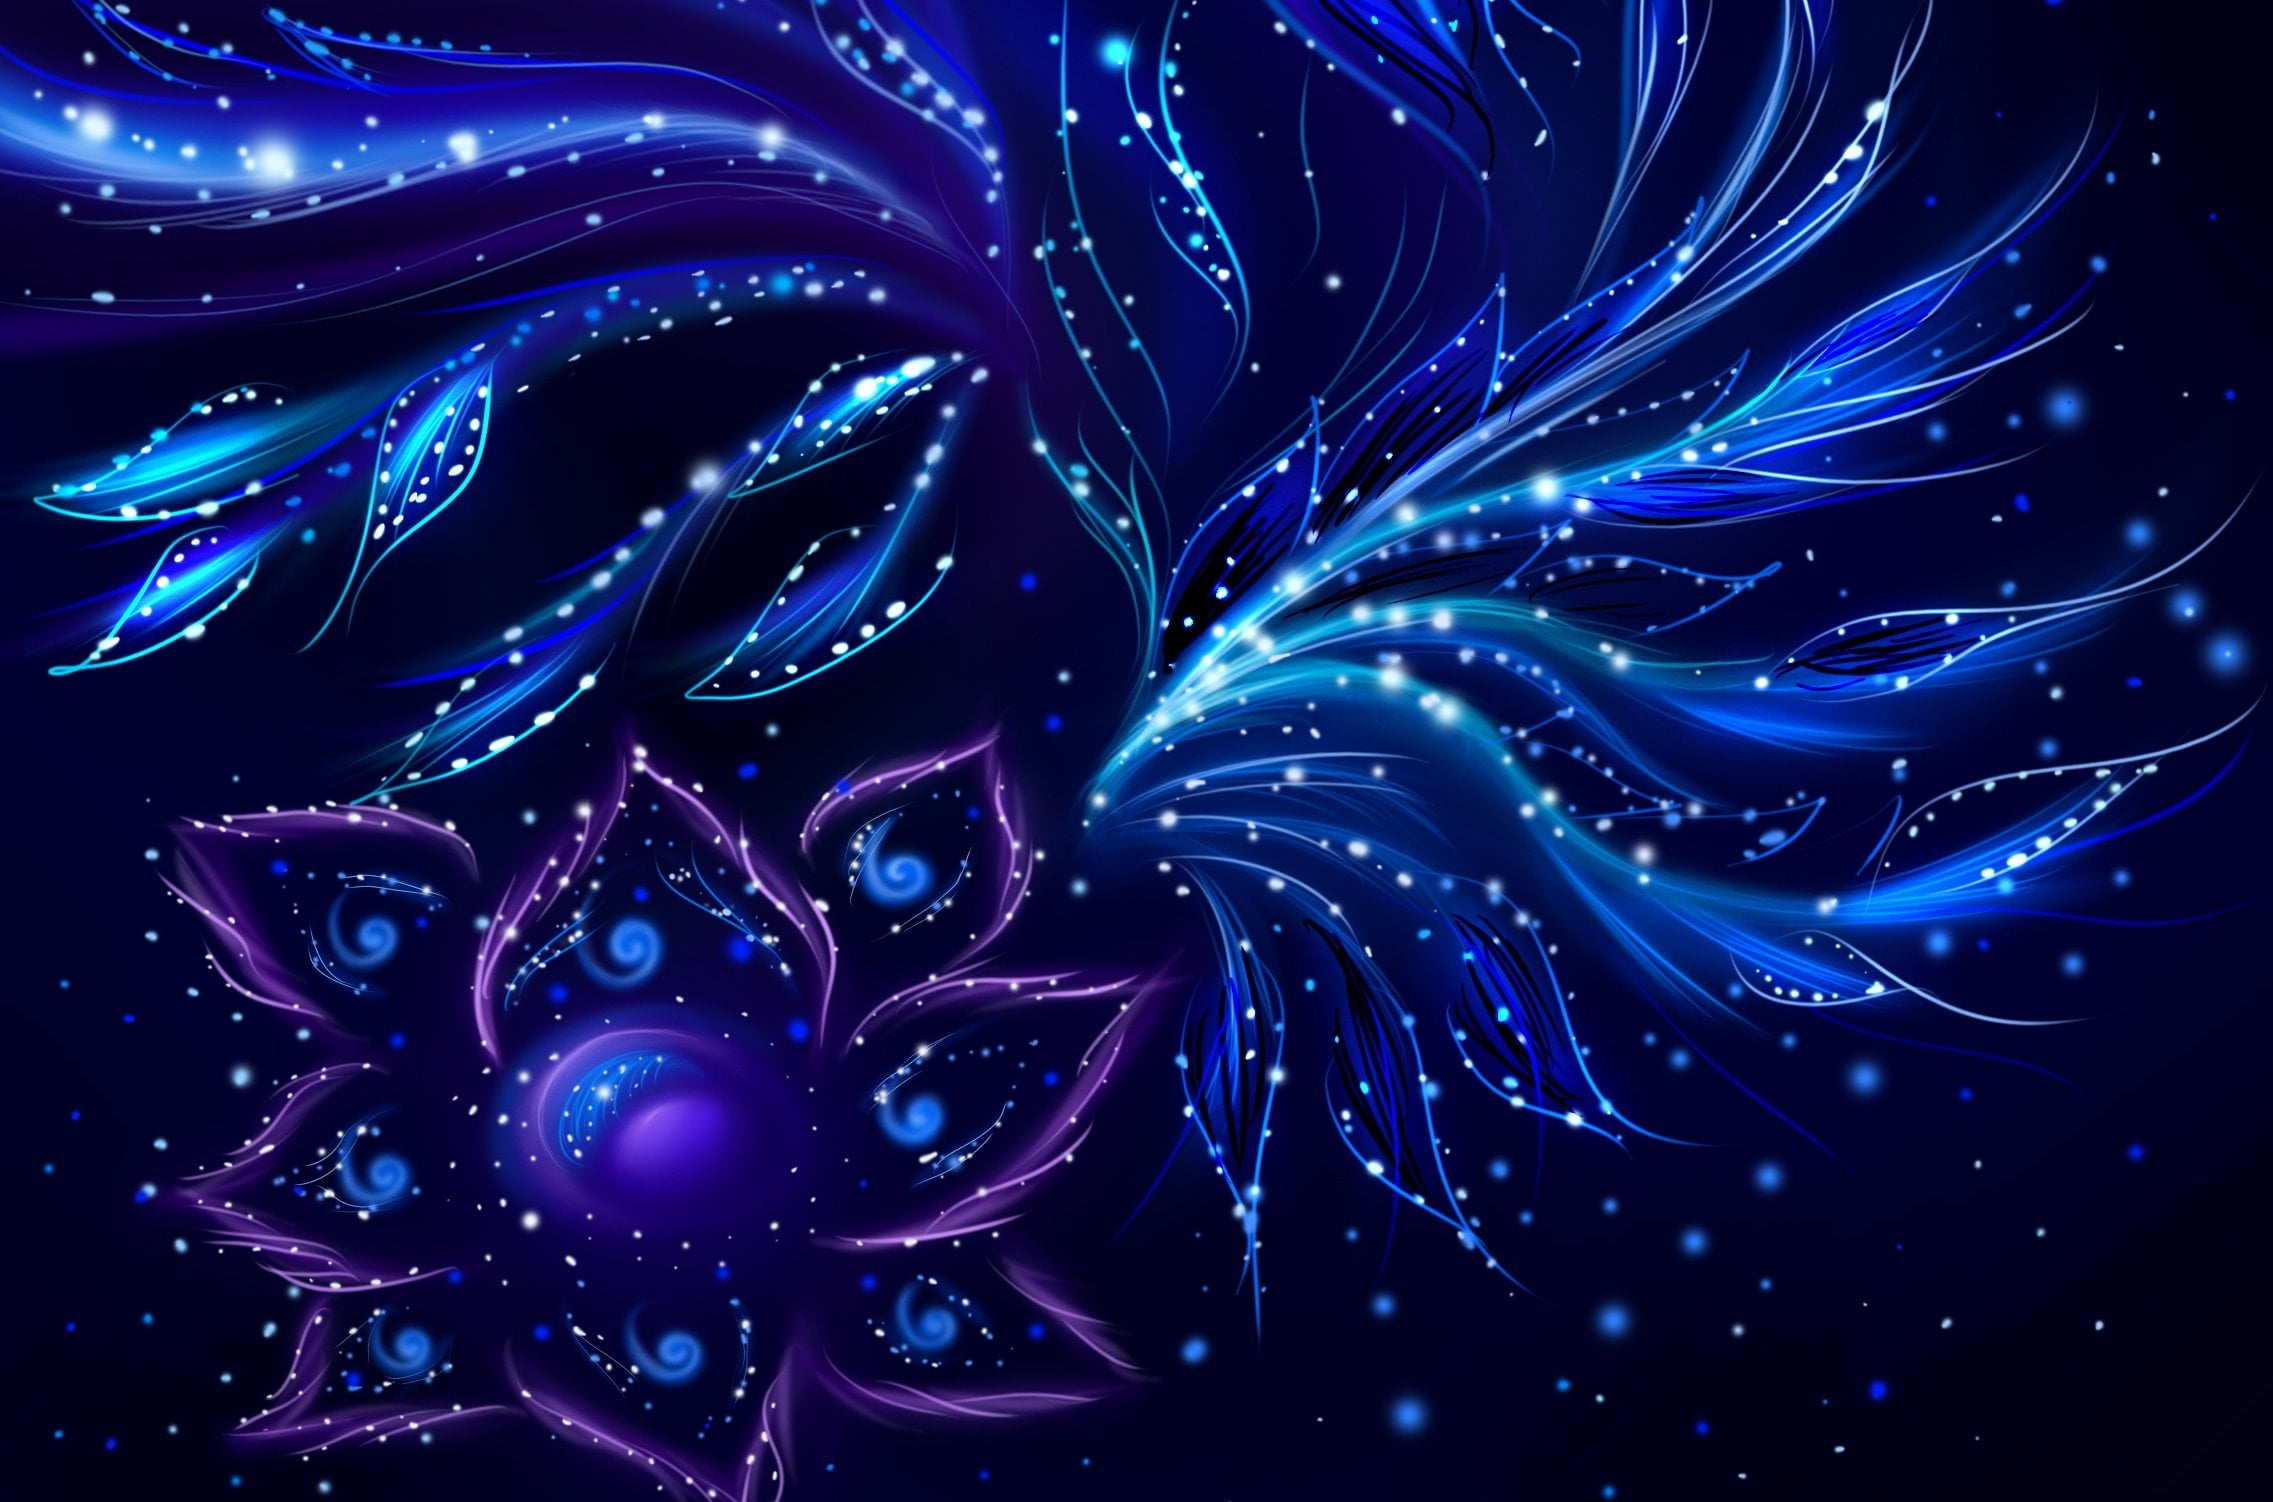 purple and blue floral digital wallpaper